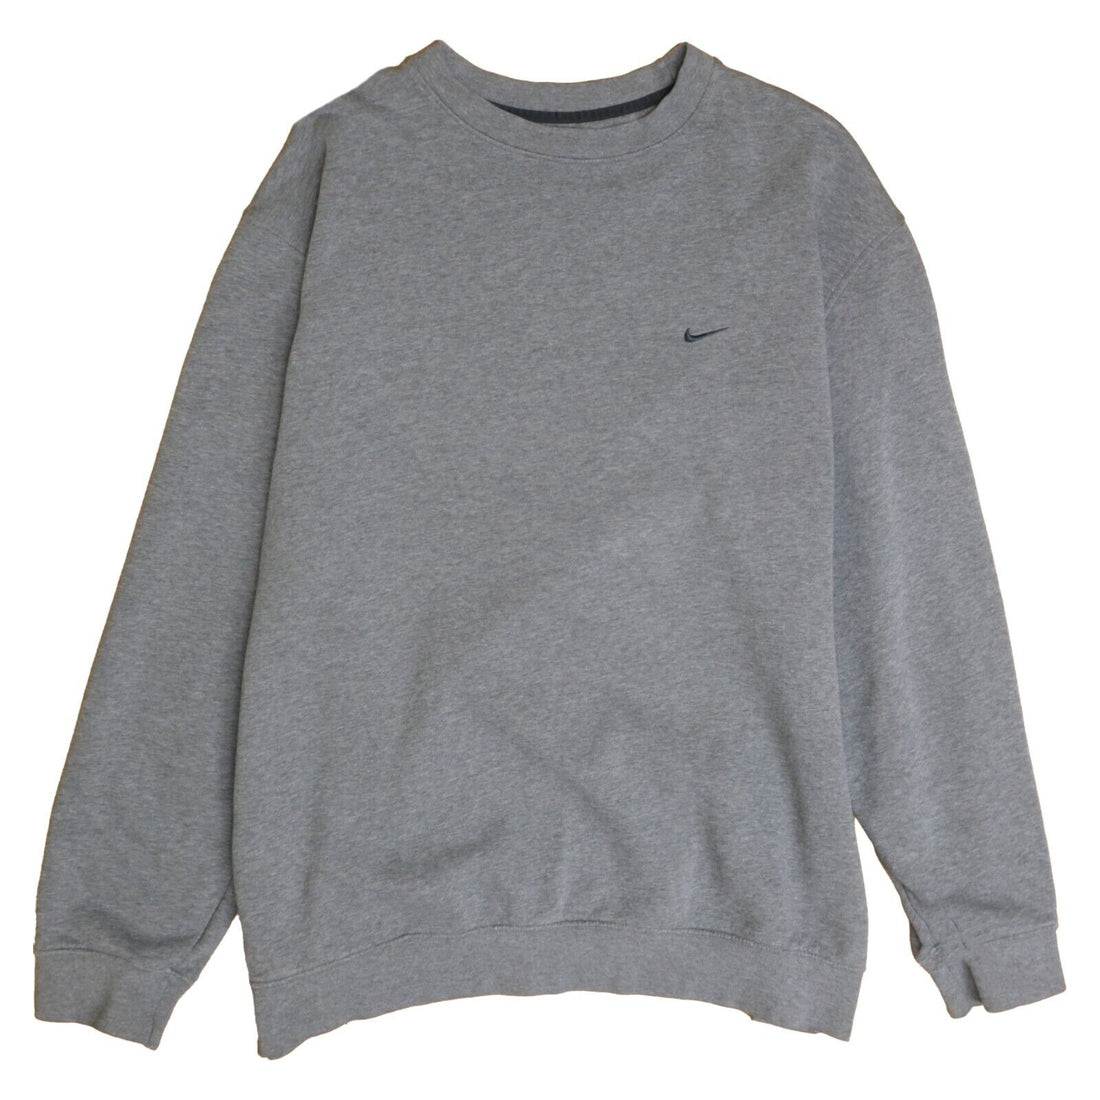 Vintage Nike Sweatshirt Crewneck Size 2XL Gray Embroidered Swoosh